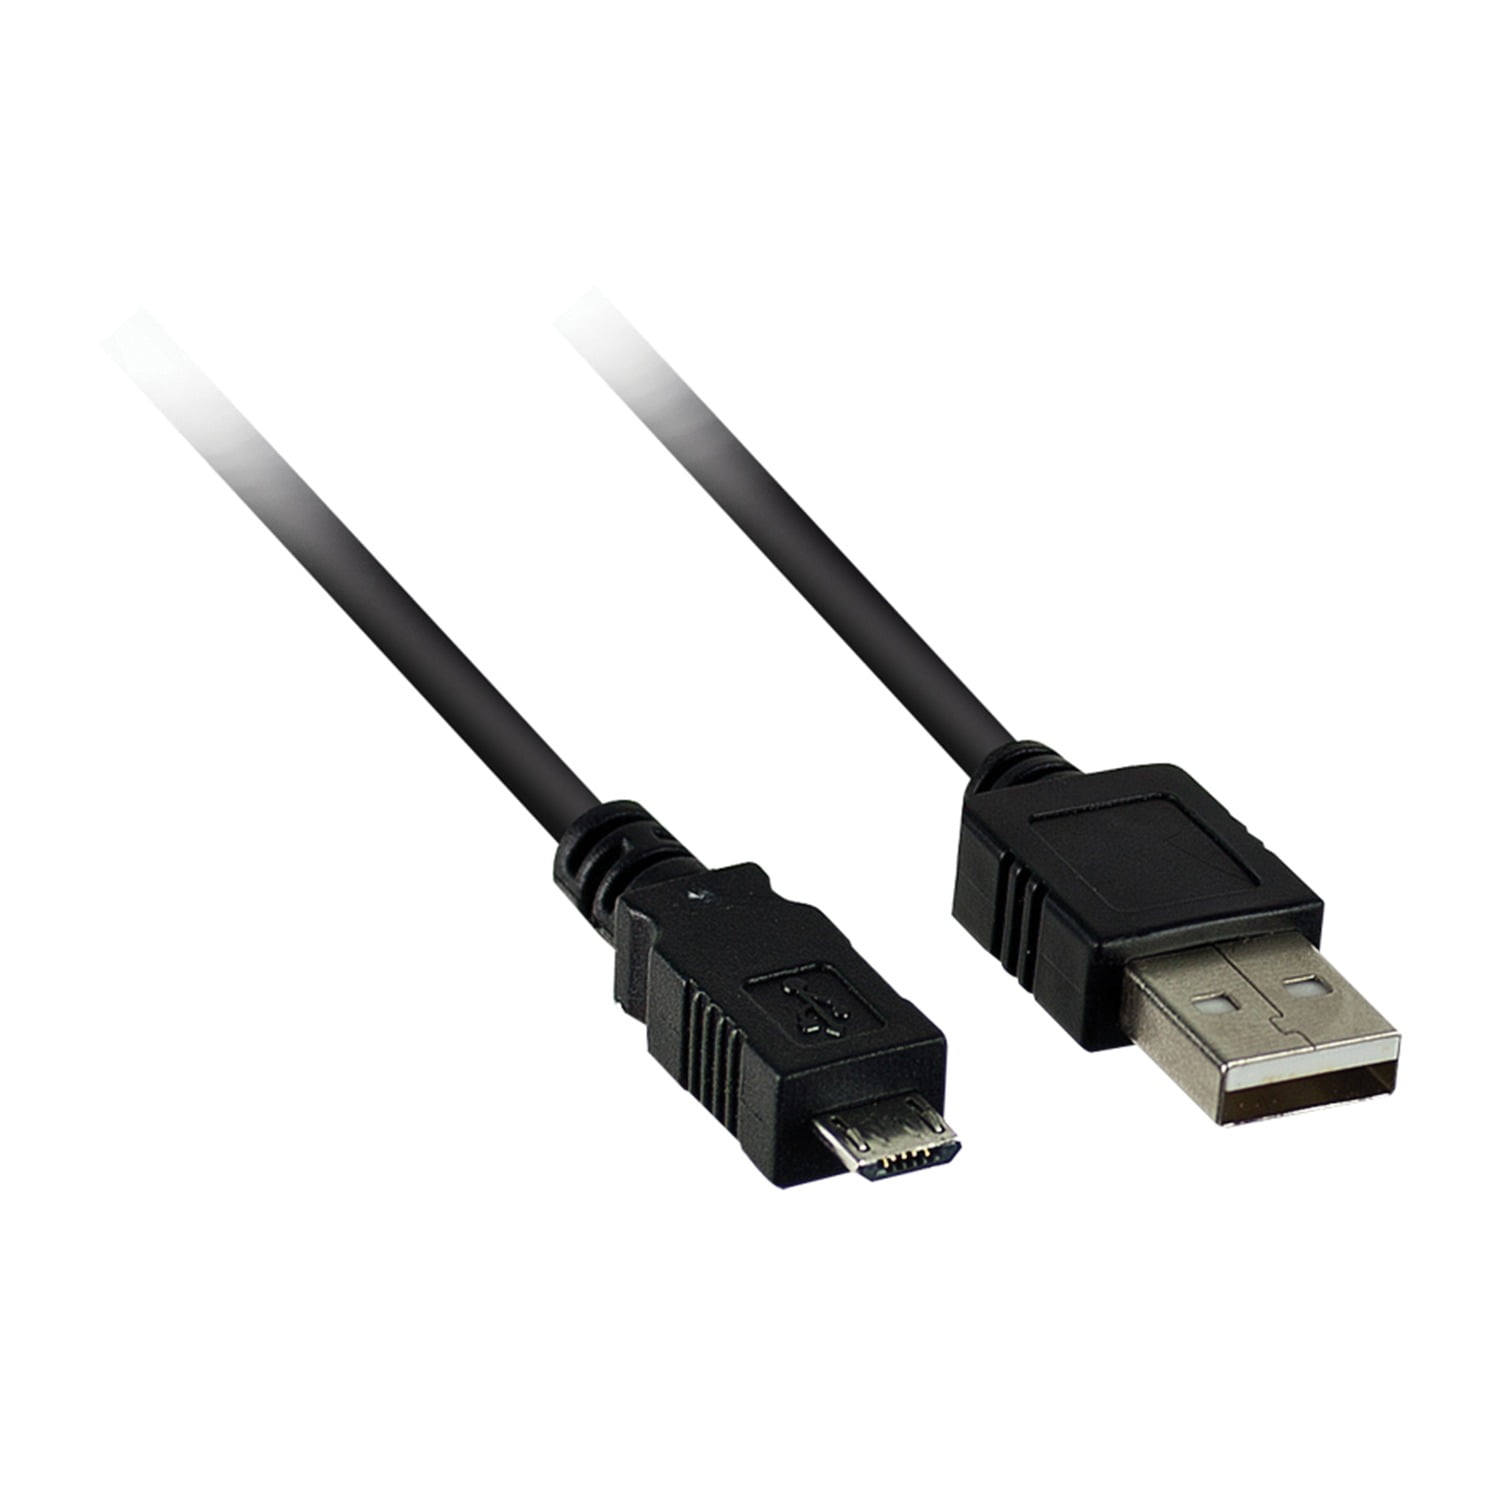 Micro USB OTG adaptador cable para kodak im5